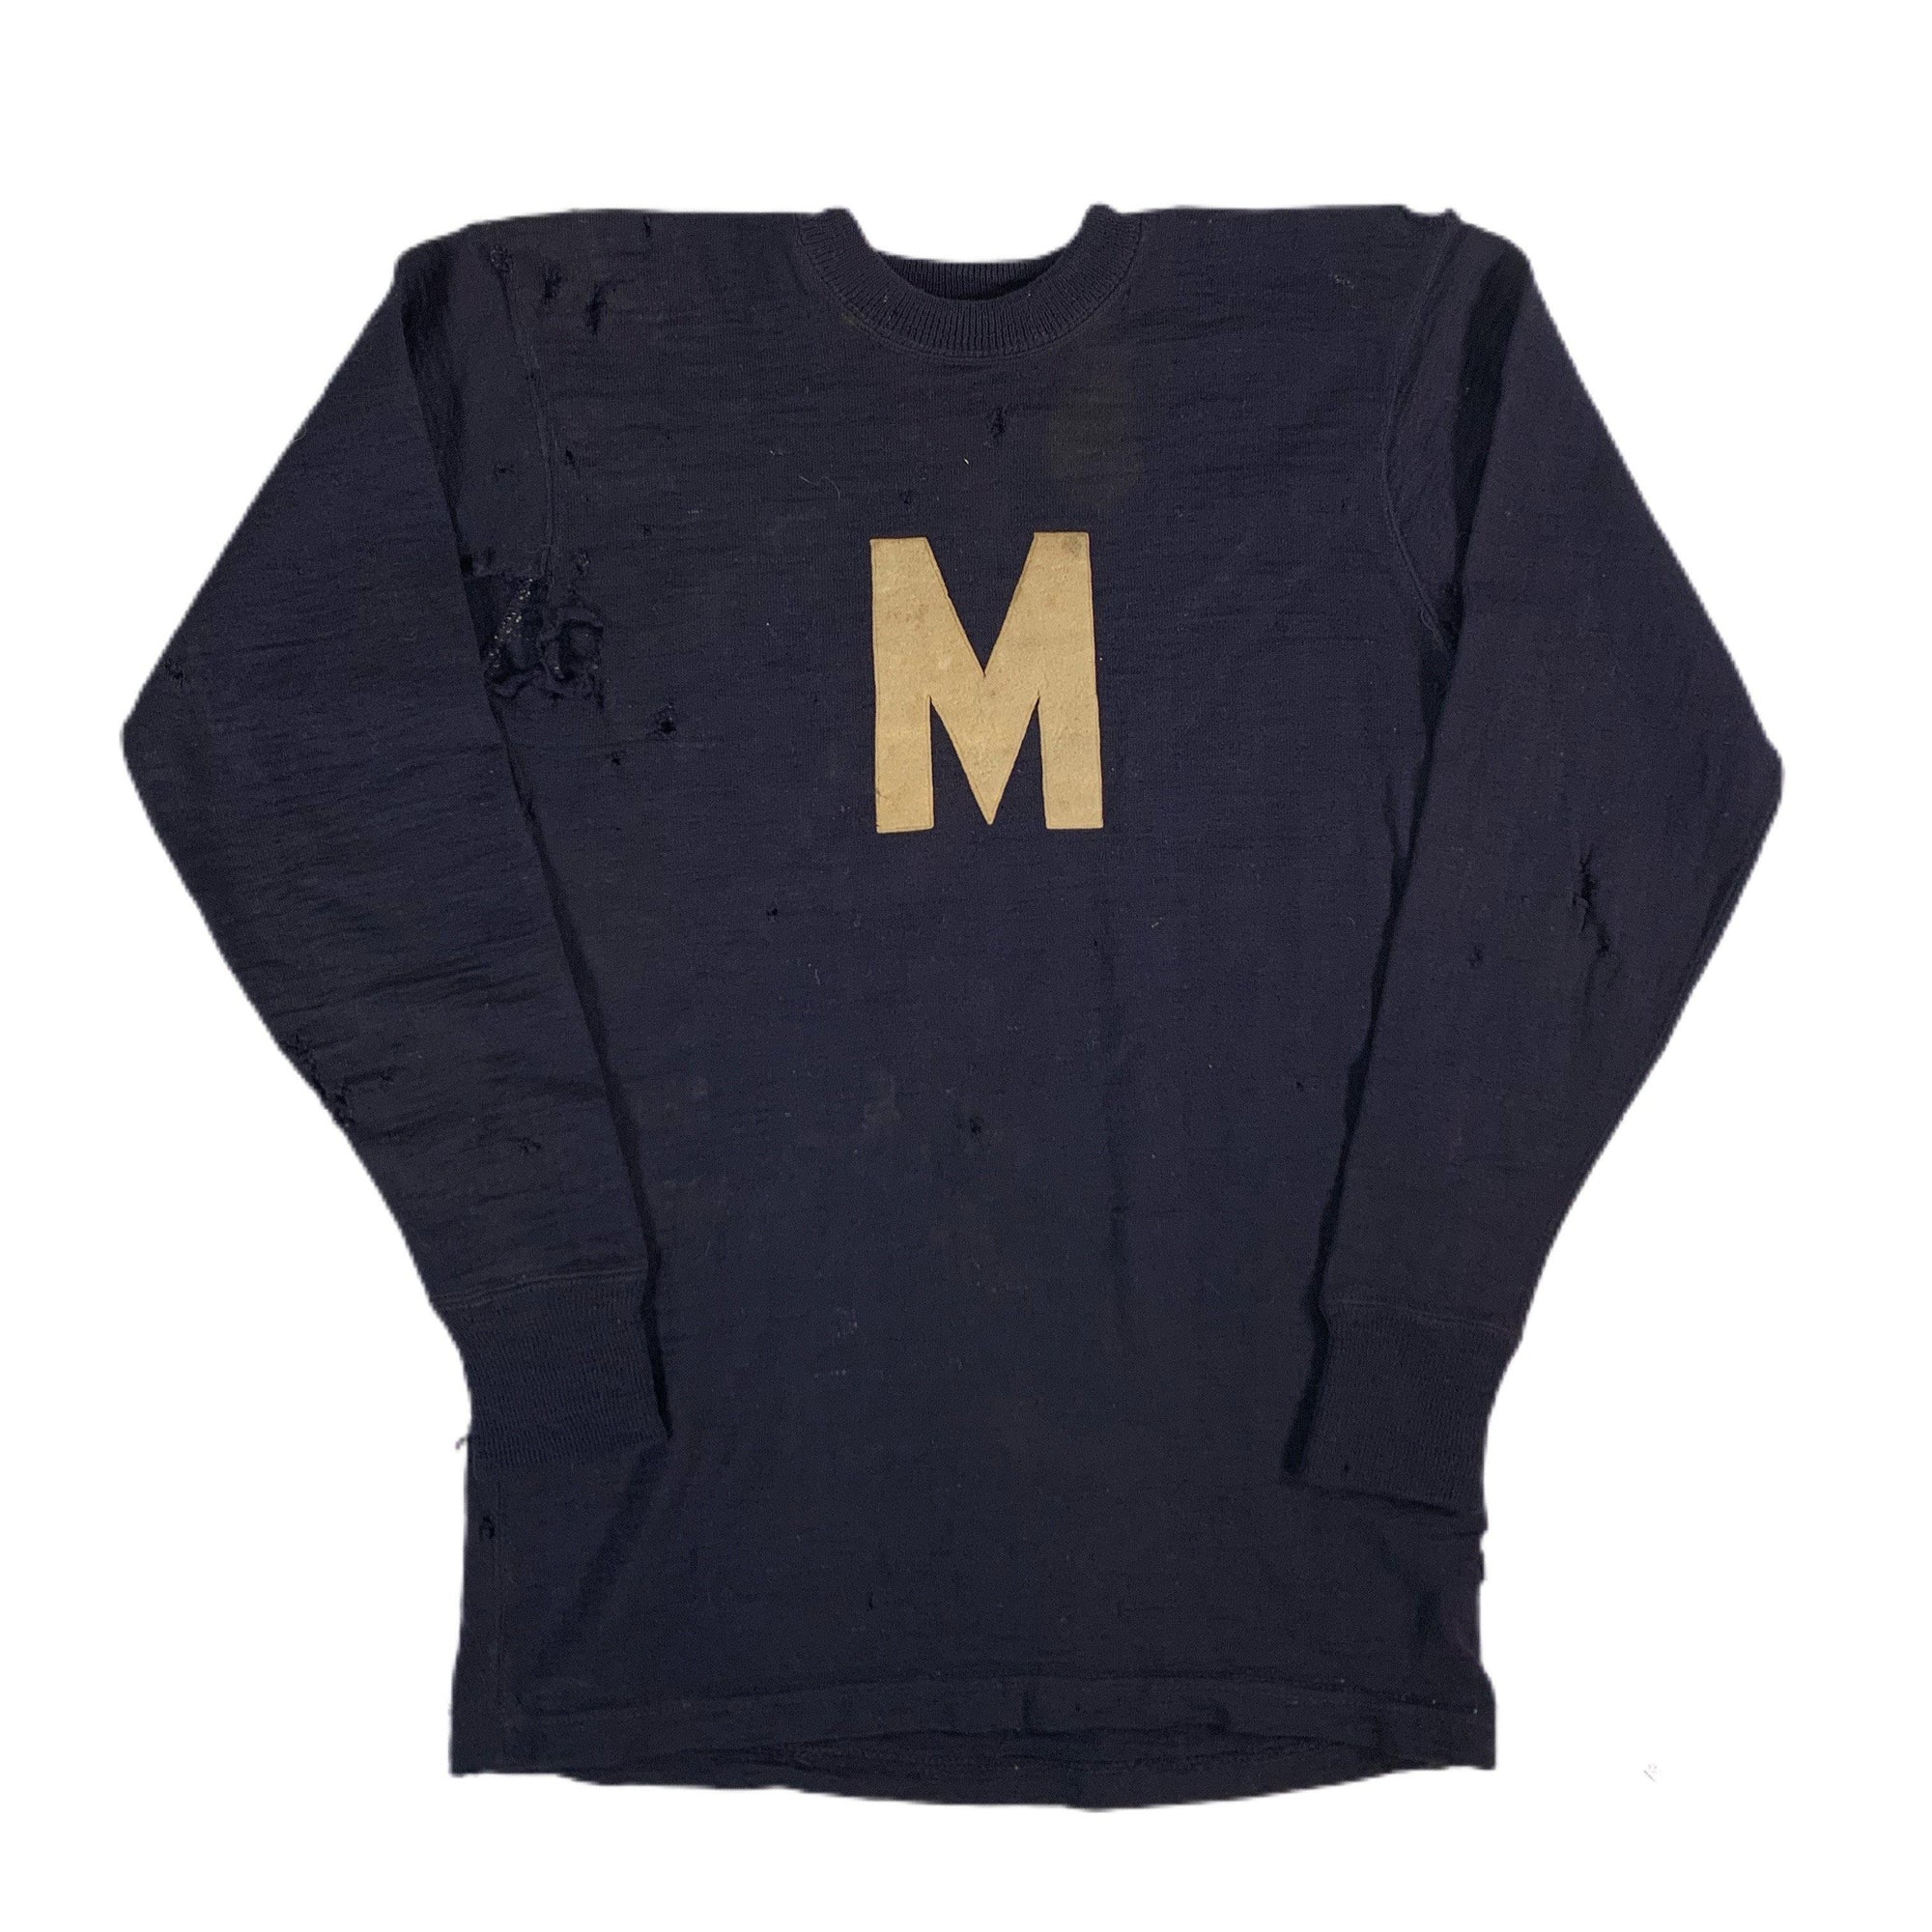 Vintage College Letter "M" Knit Sweater - jointcustodydc